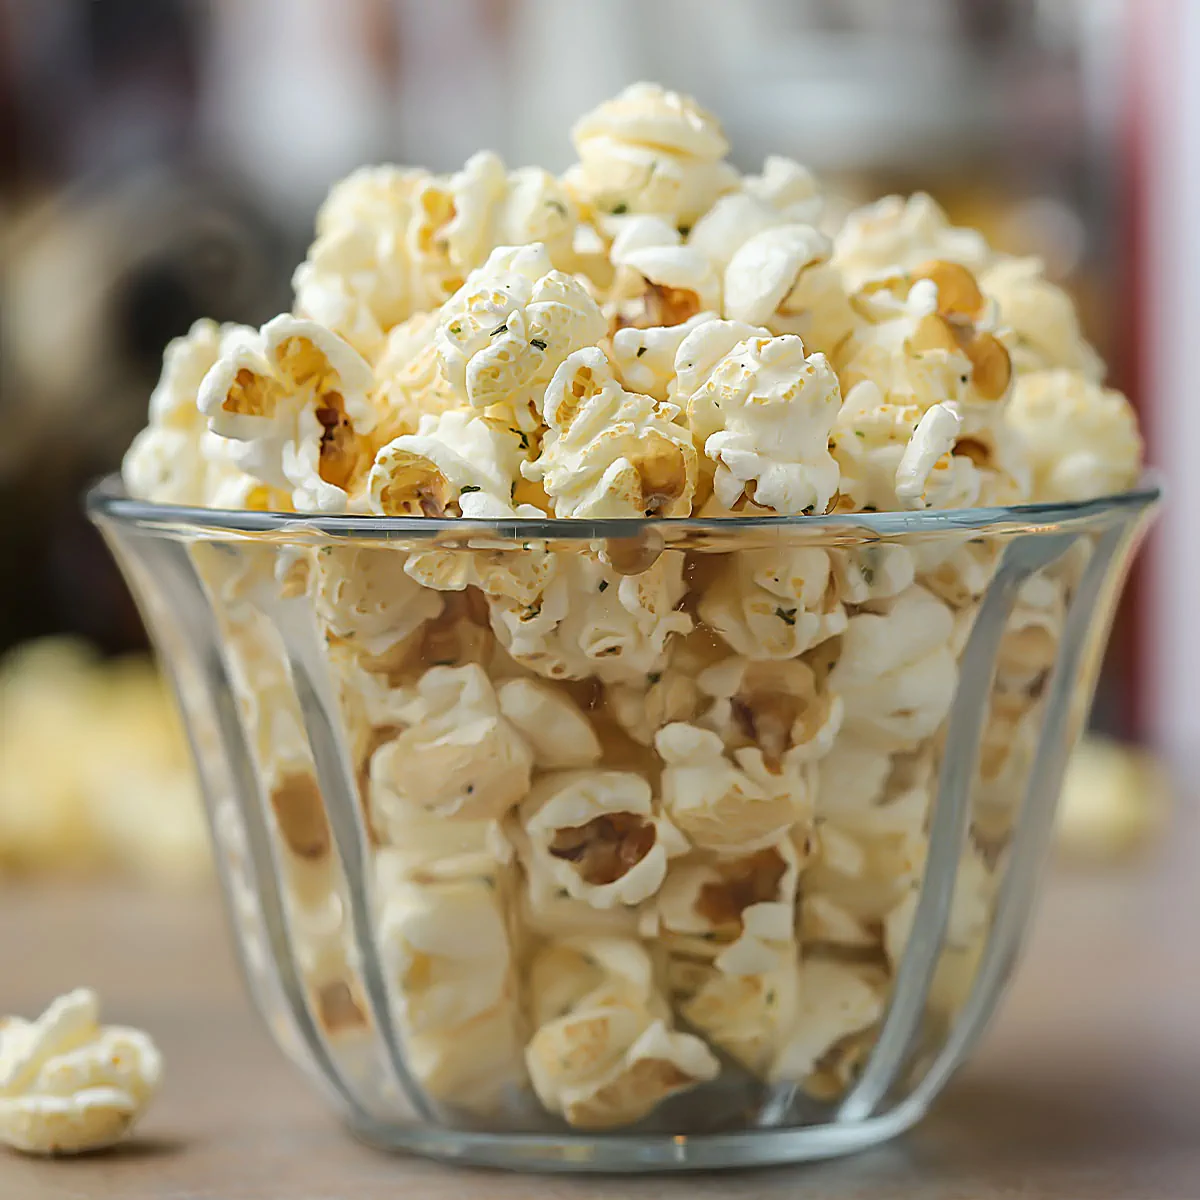 Ranch Gourmet Popcorn - Ranch-flavored popcorn